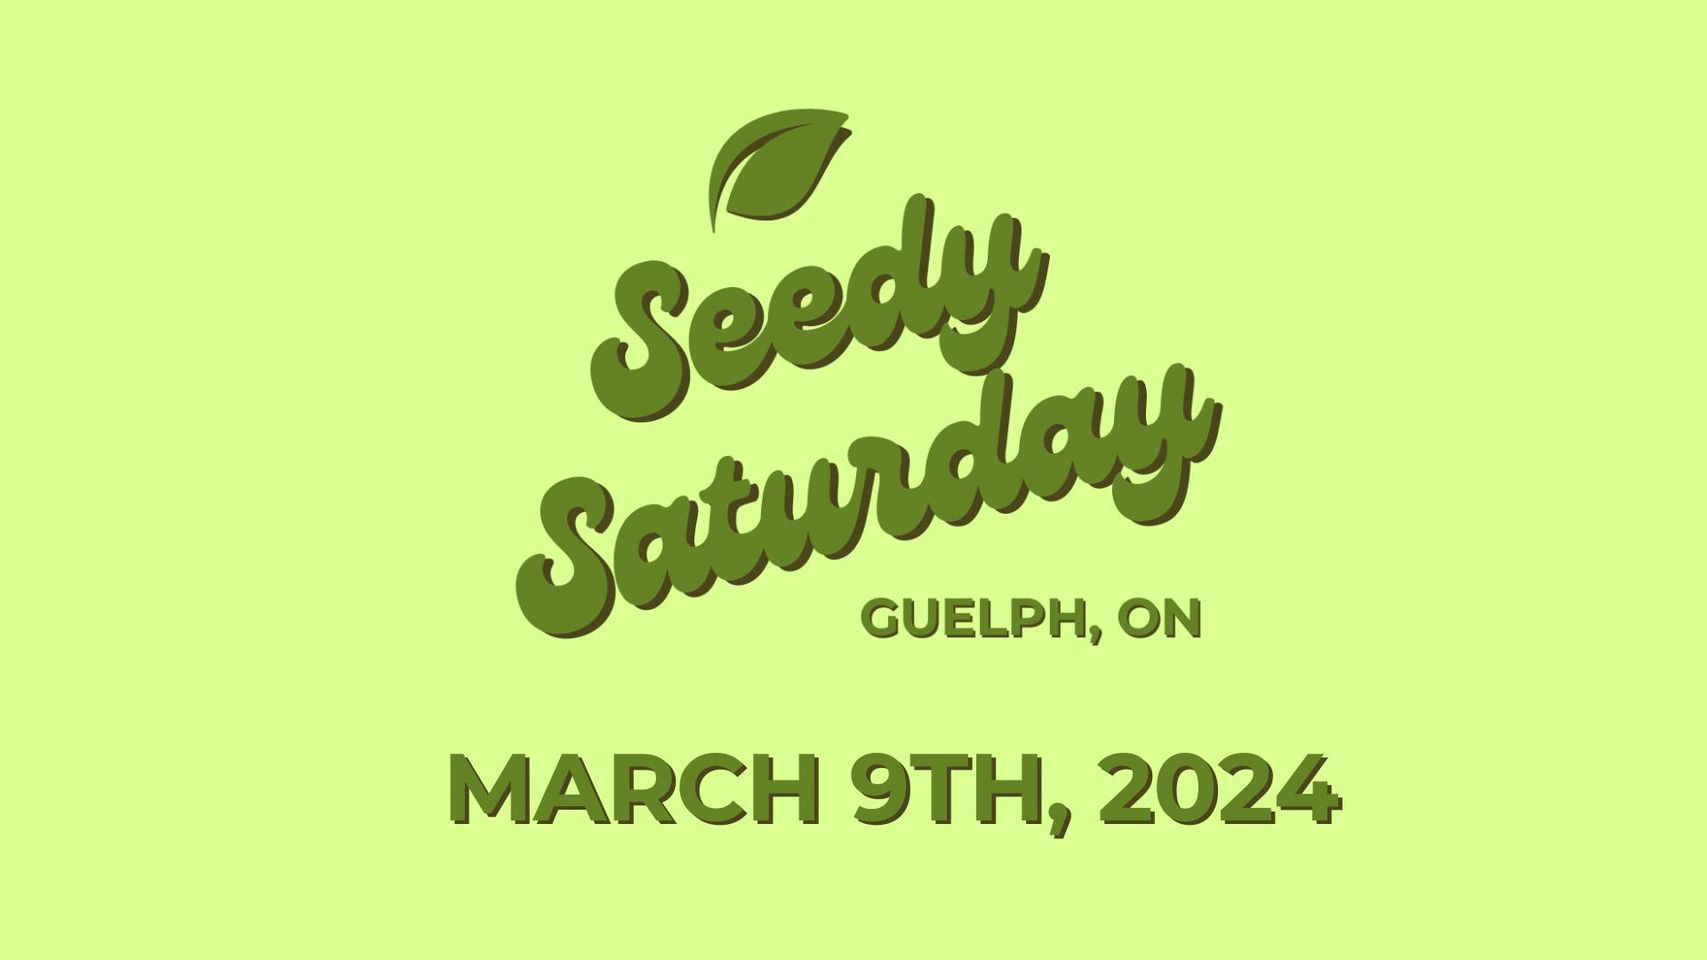 Guelph Seedy Saturday